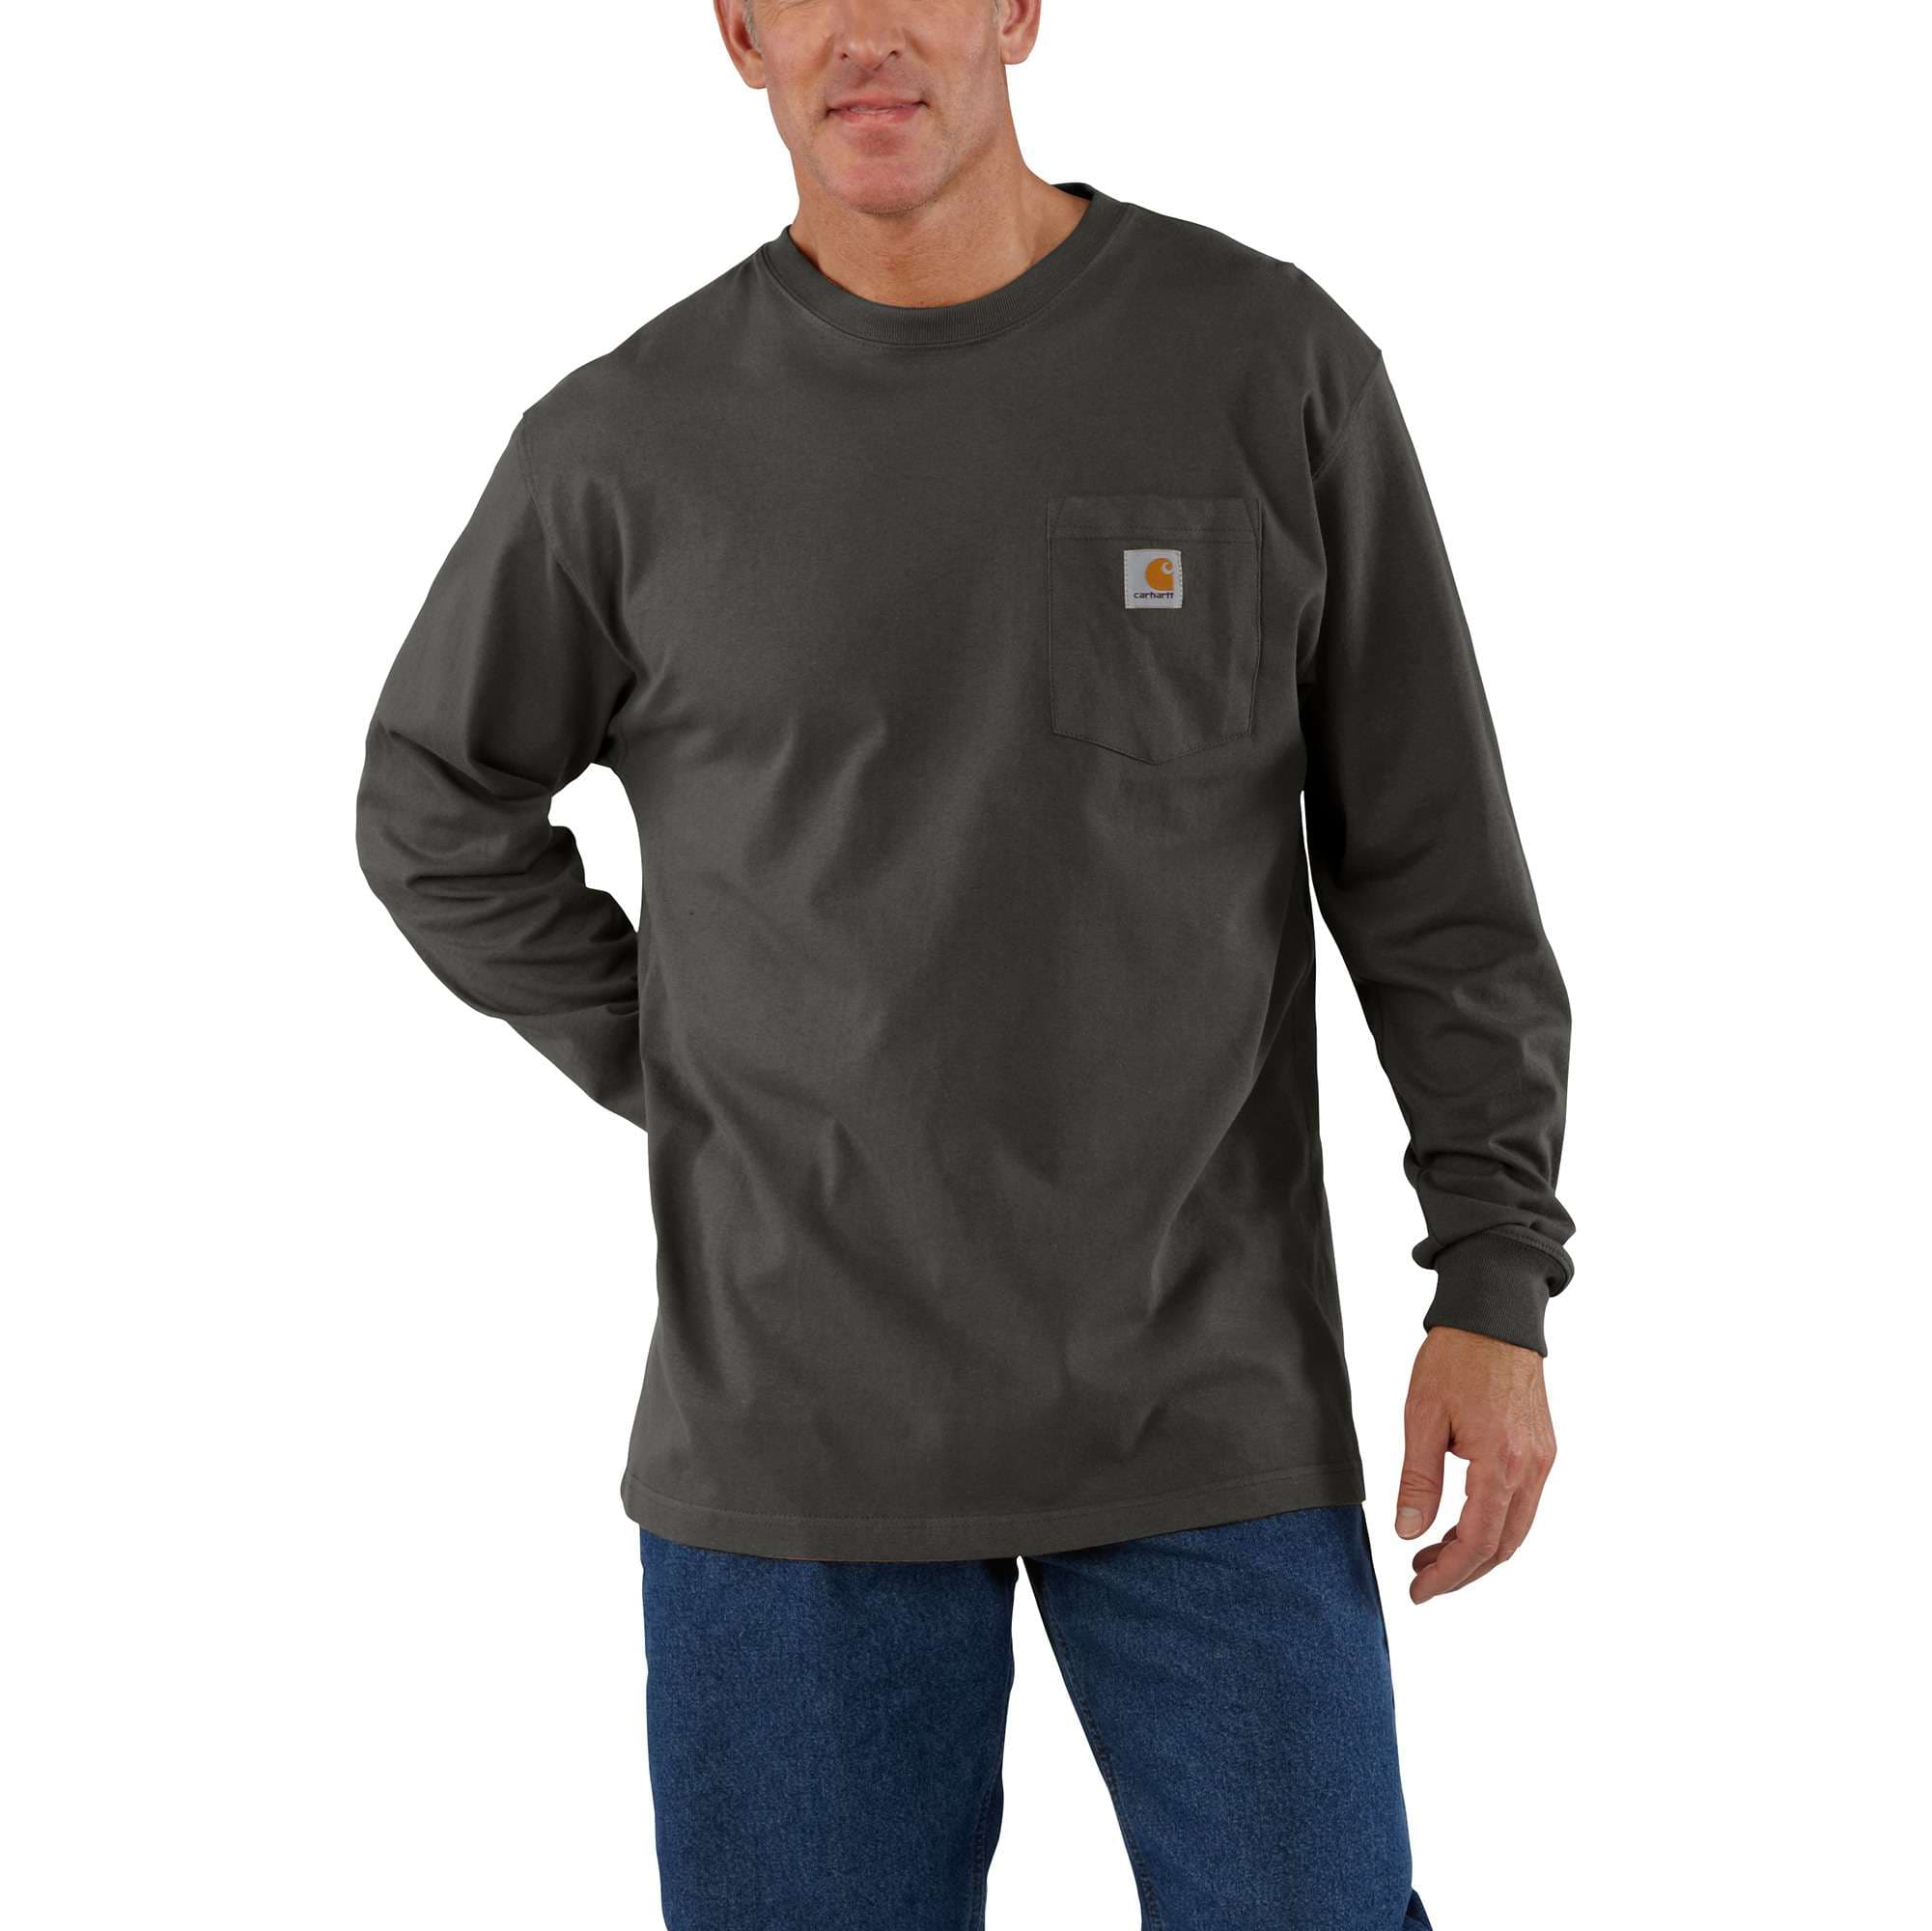 L size shirt S size shirt Dog Style T- shirt XL size shirt M size shirt XXL size shirt T-Shirt for Men